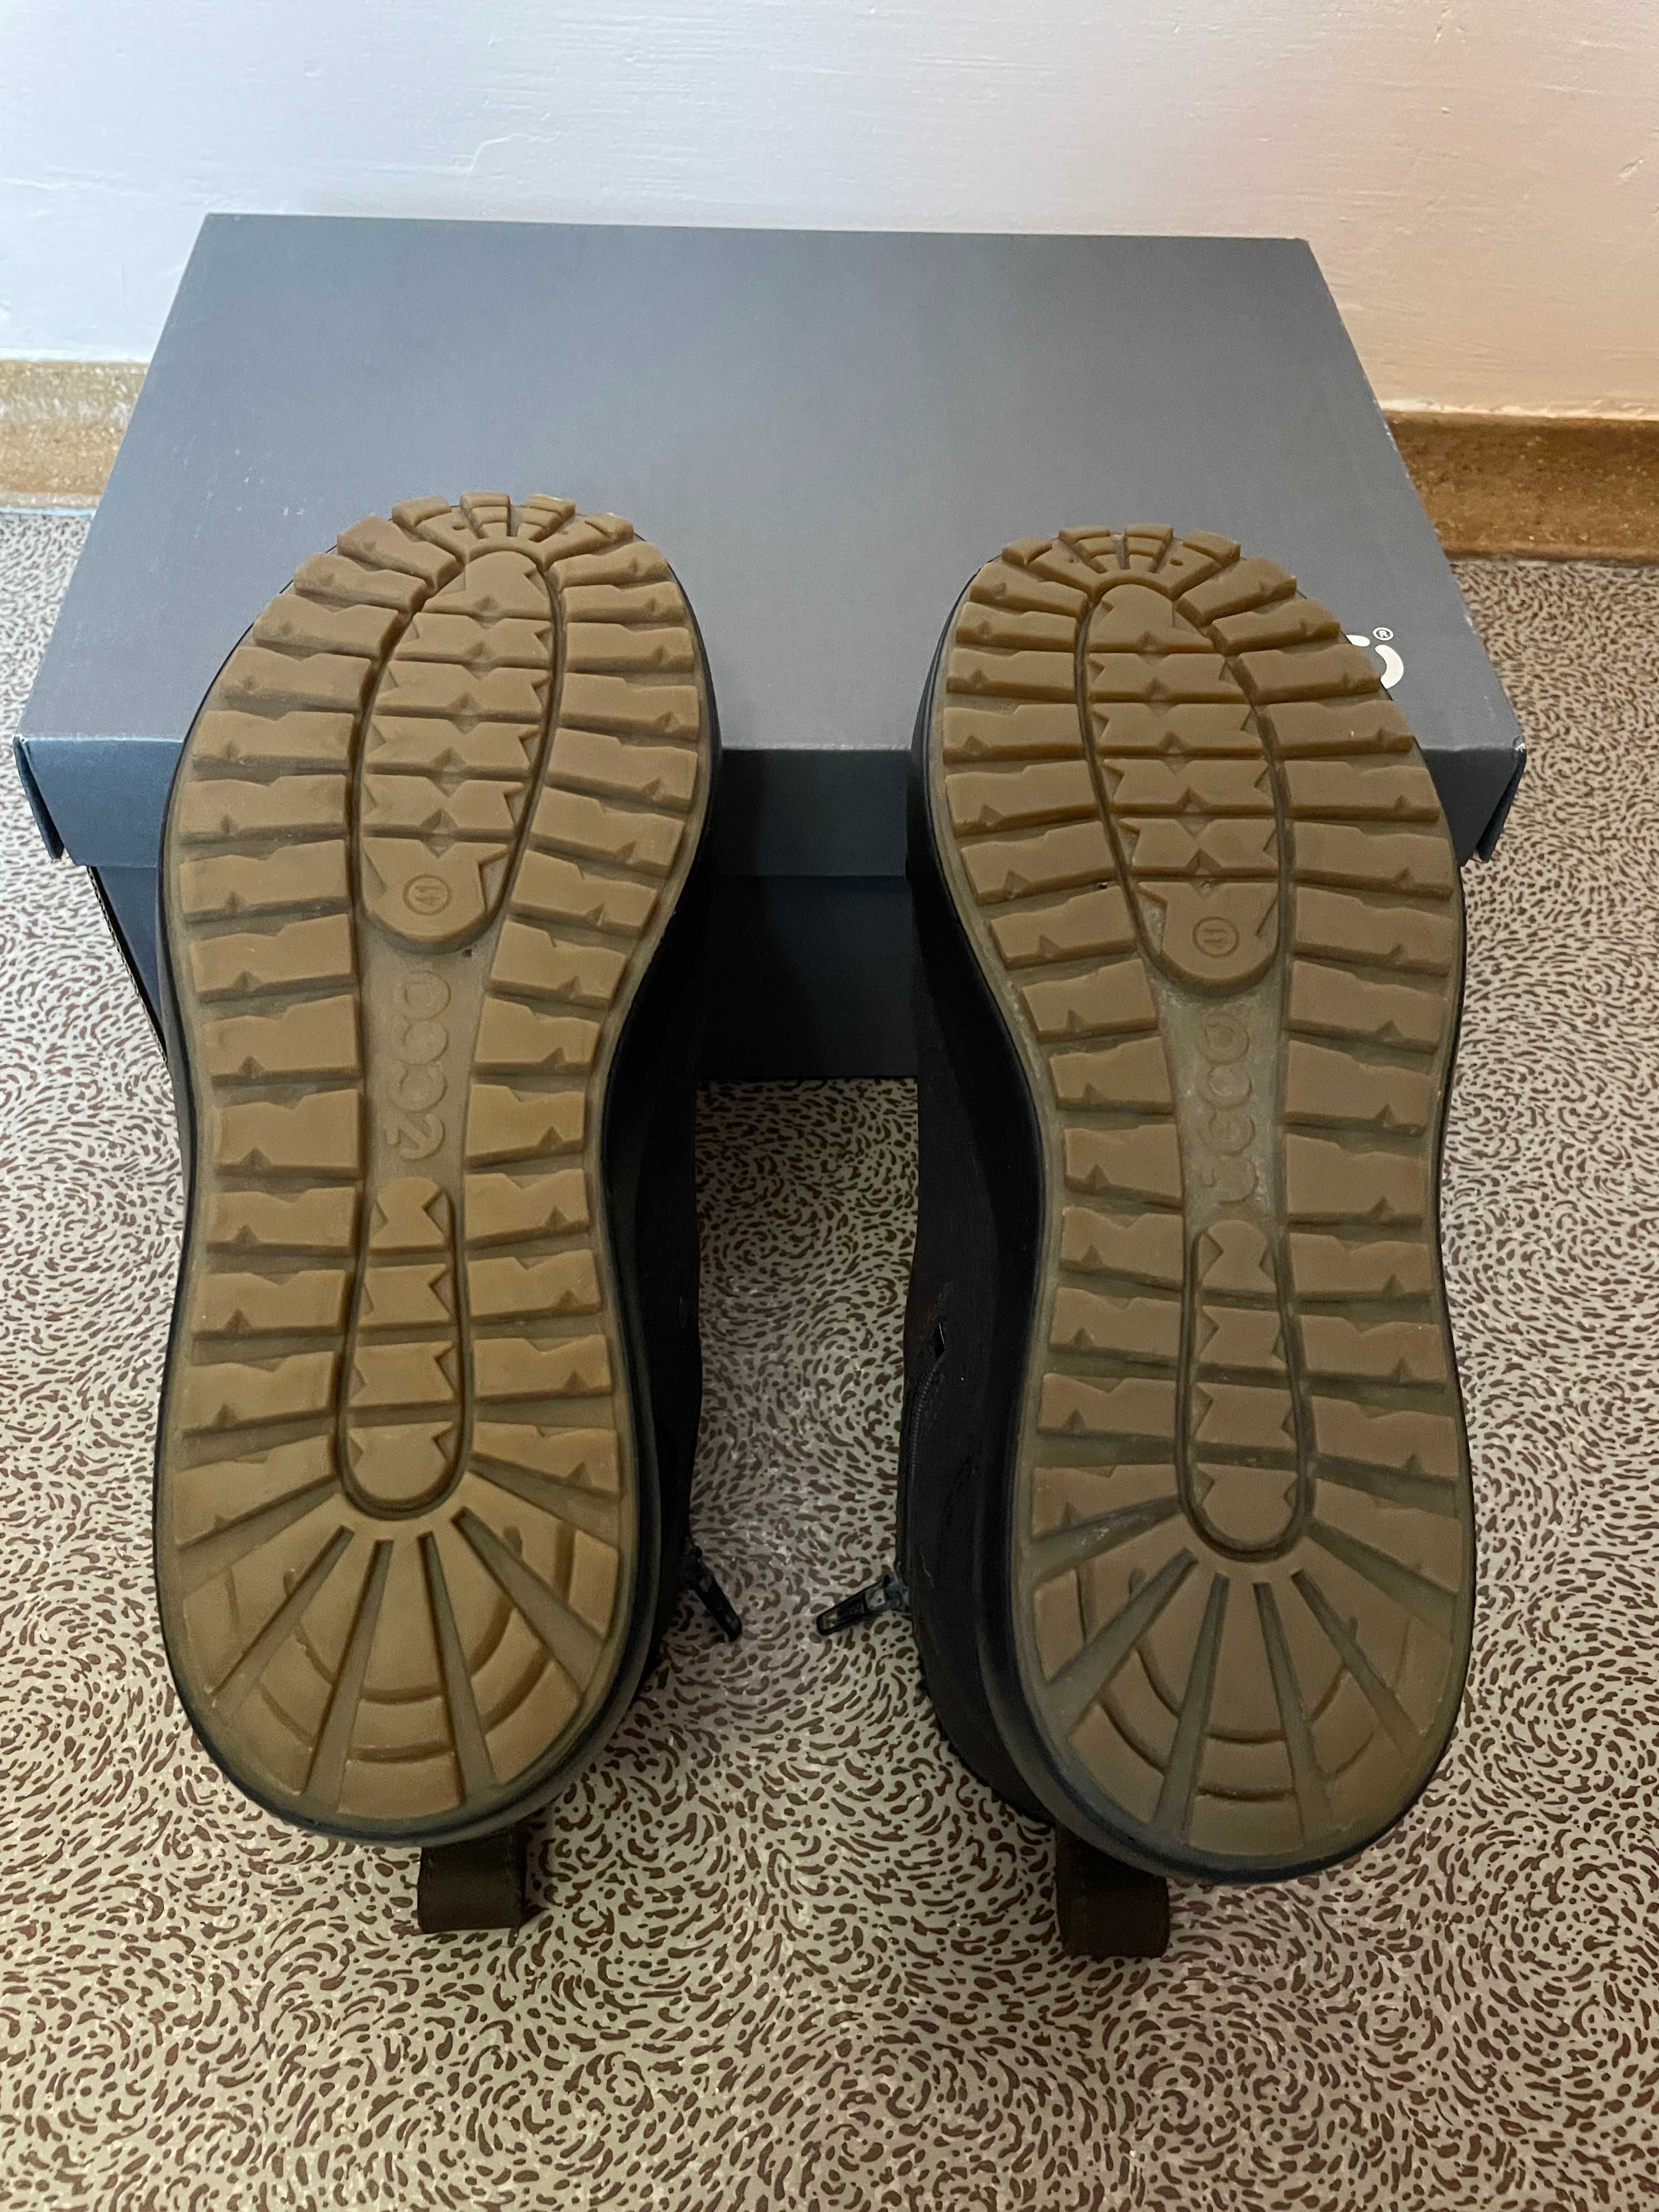 Ботинки демисезонные ECCO Soft 7 Tred, зимові черевики екко, чоботи